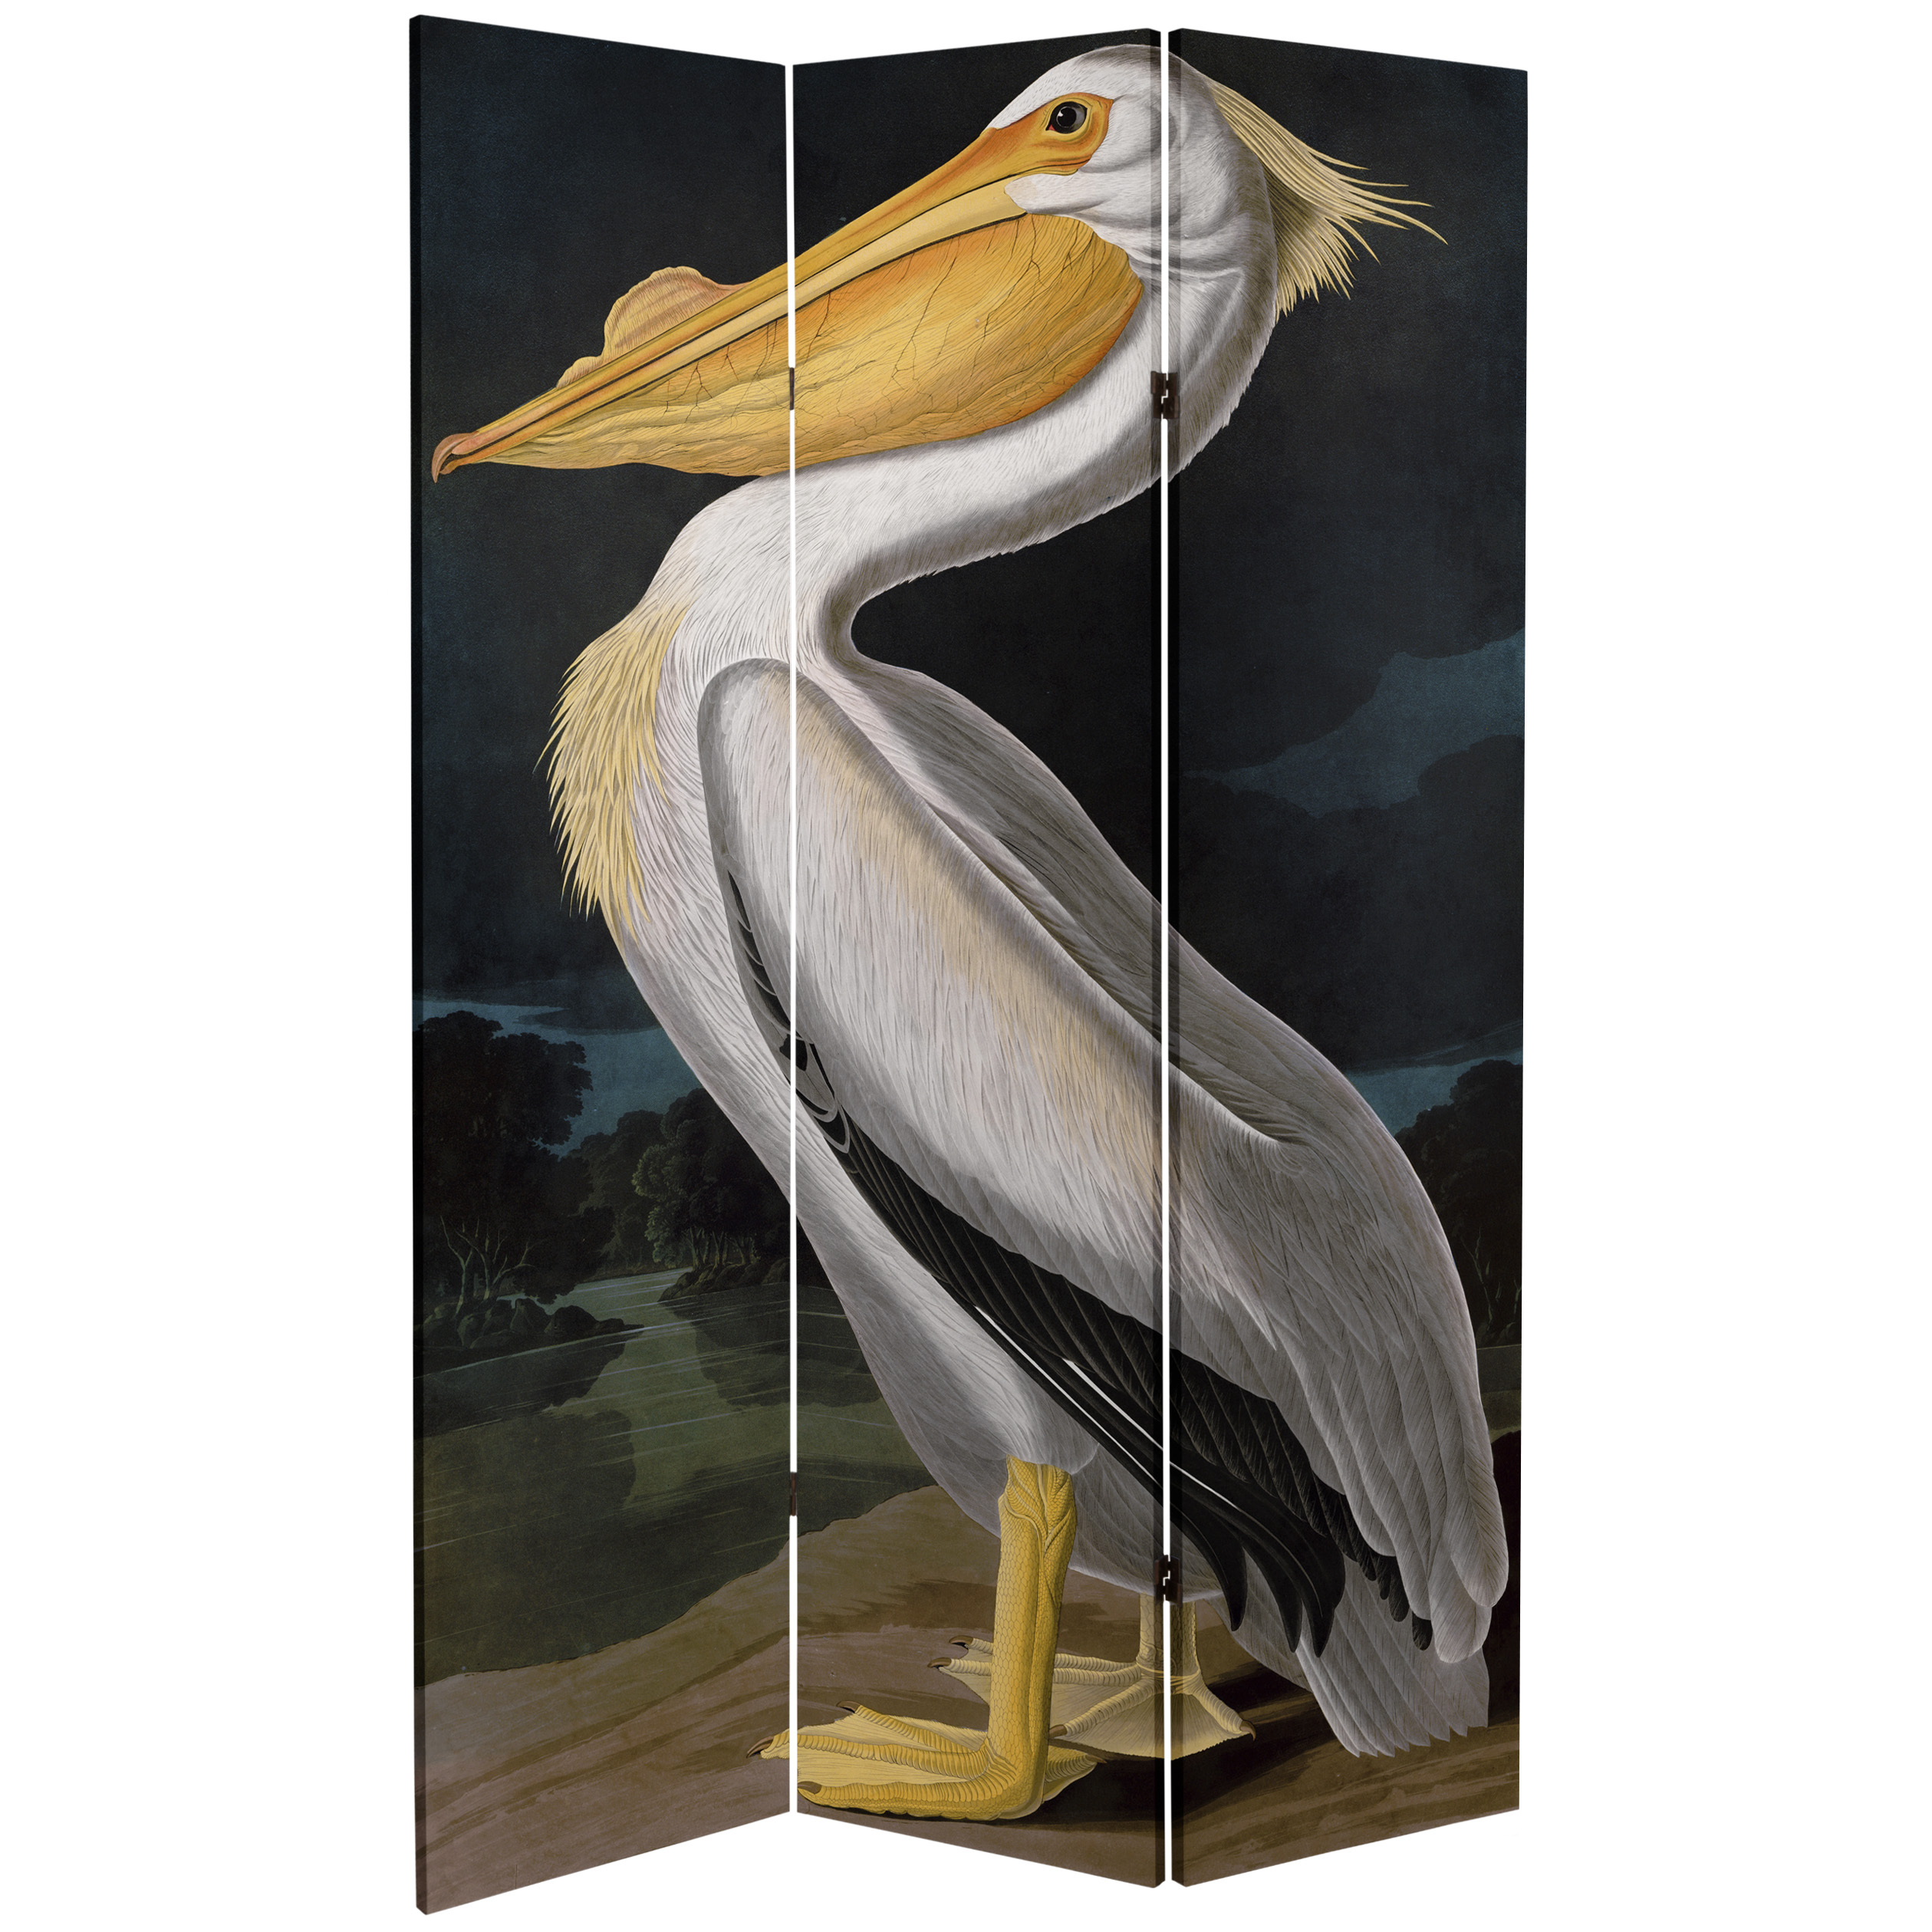 6 ft. Tall Audubon Pelican Canvas Print Room Divider Floor Screen - image 3 of 3